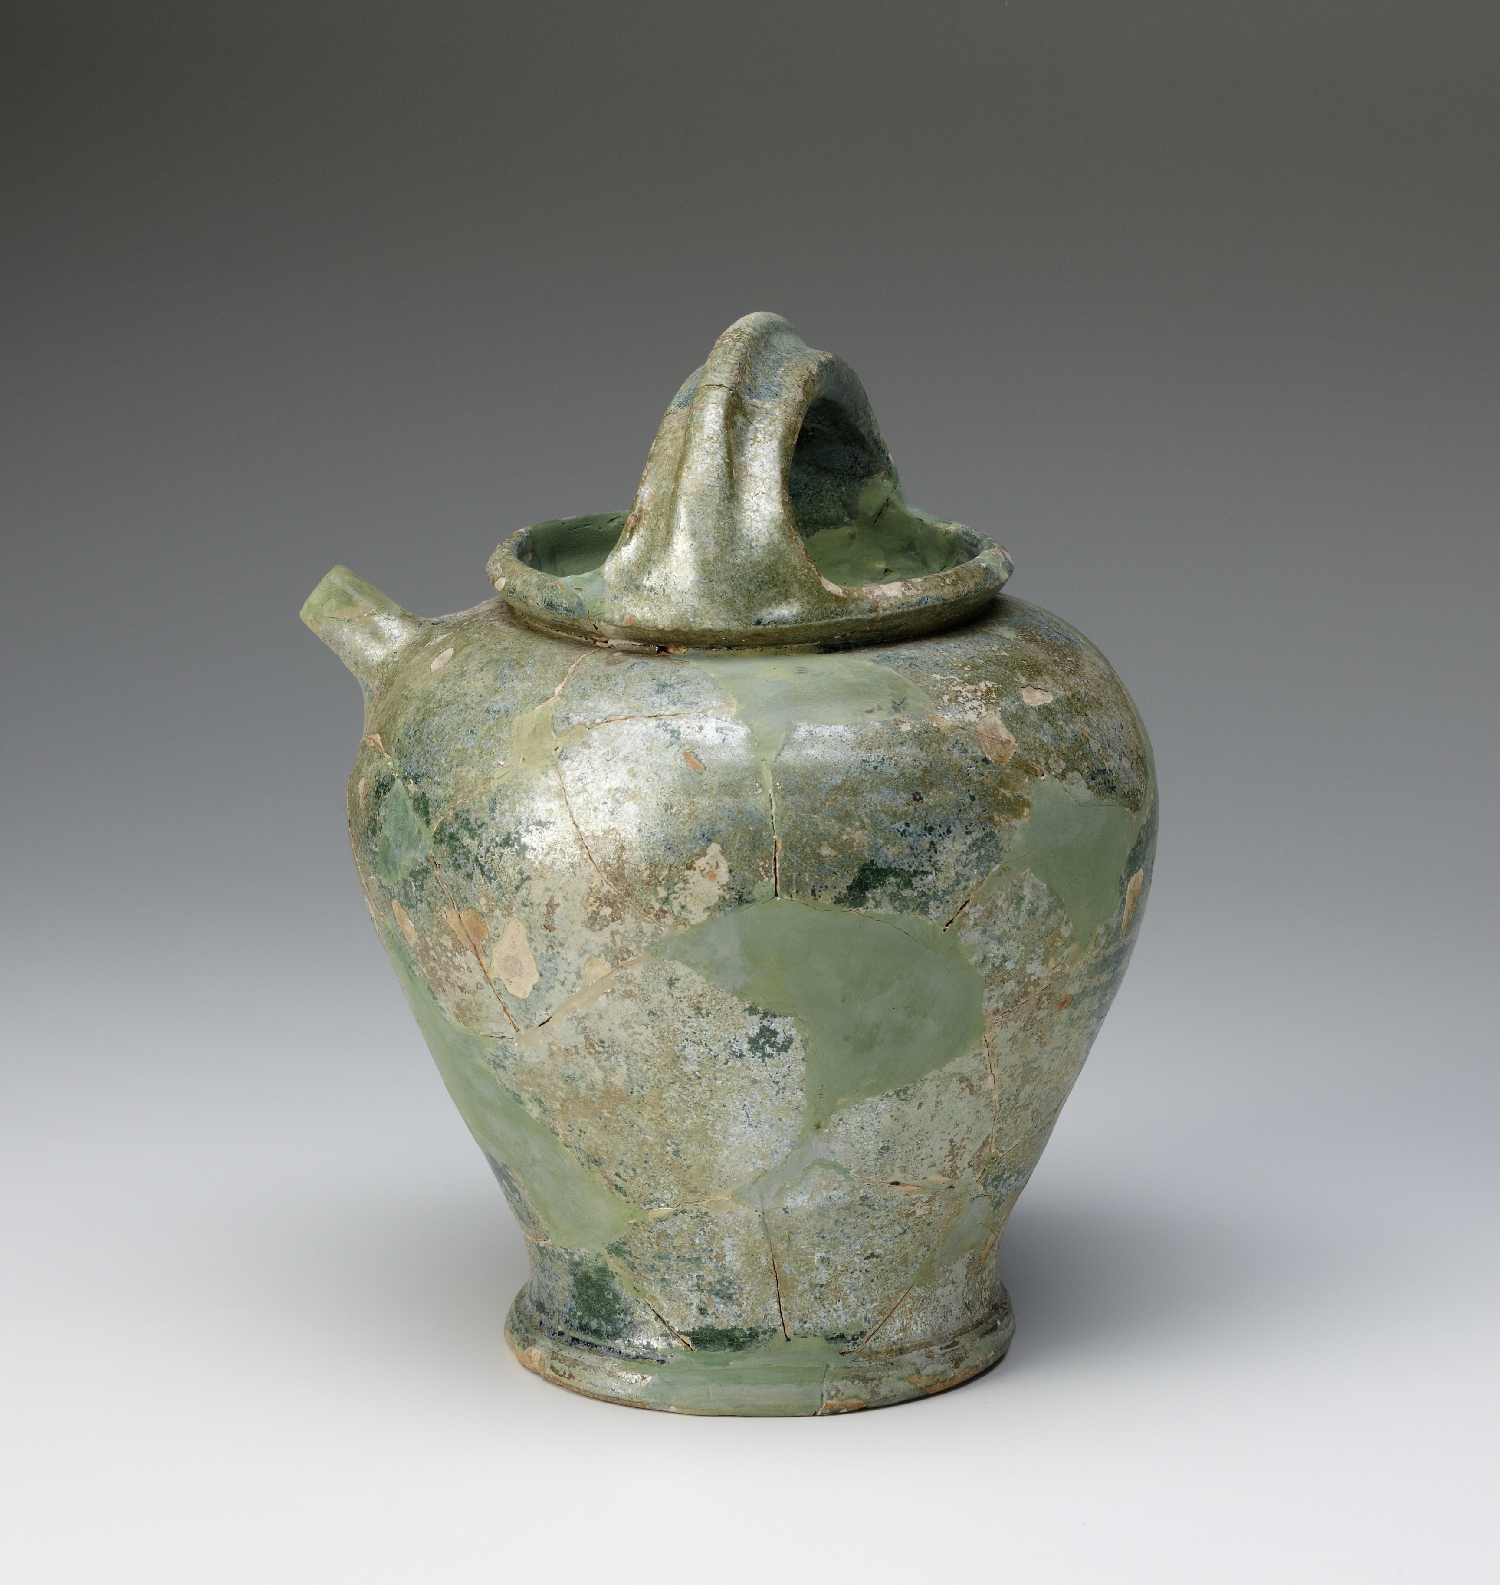 Hooped jug, discovery location: Salzburg City, Neue Residenz, Mozartplatz 1, Early Modern Age, ca. 1600, ceramic, inv. no. ARCH 3110-99